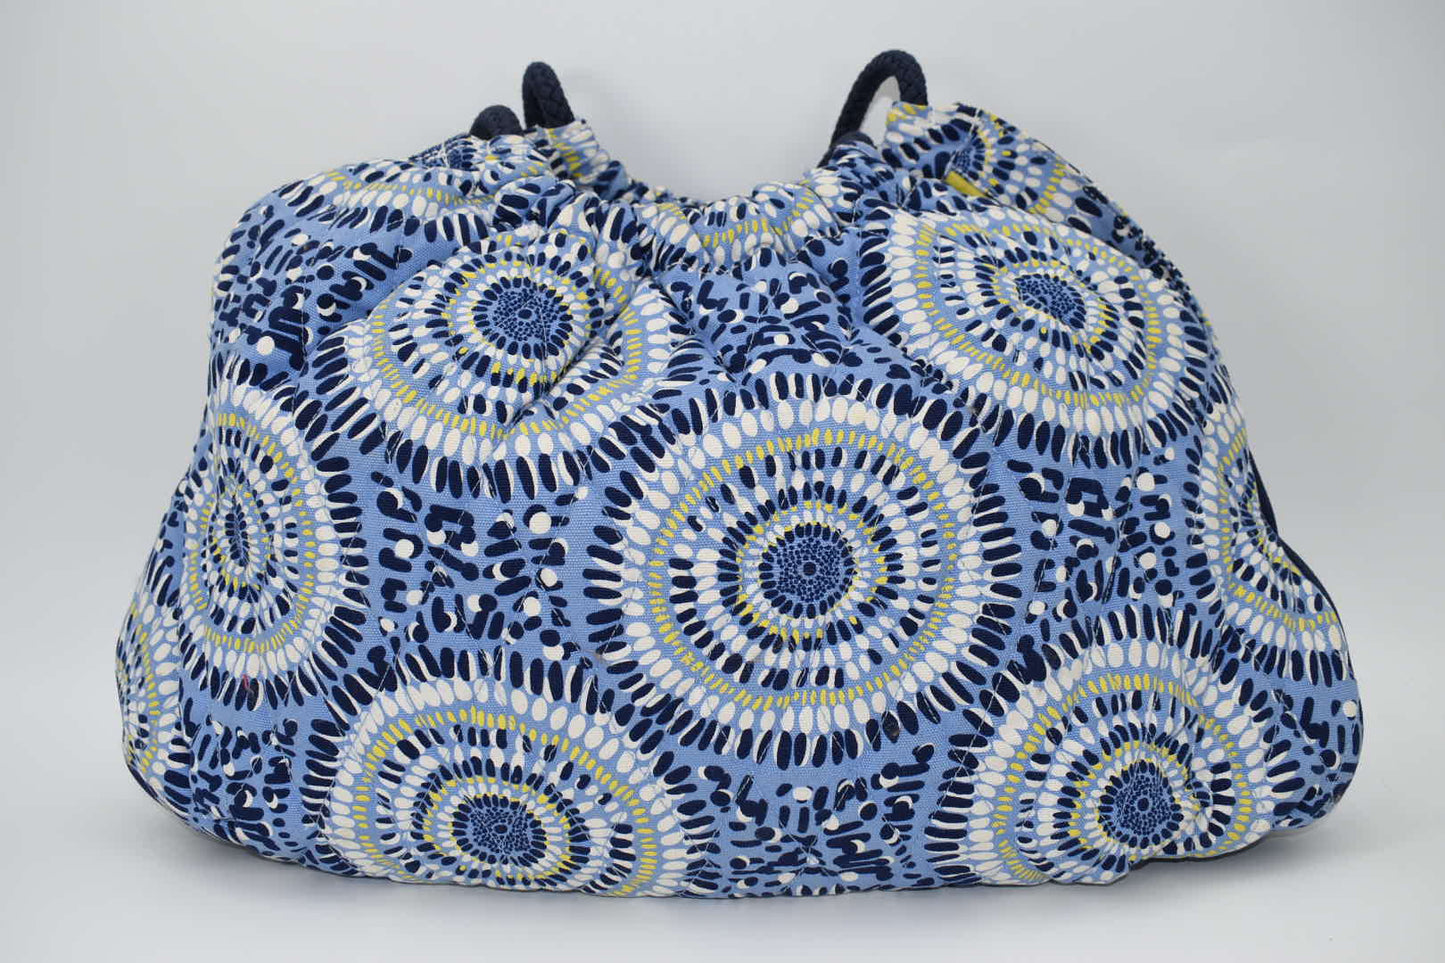 Vera Bradley Large Tote/Shoulder Bag in "Starry Night" Pattern